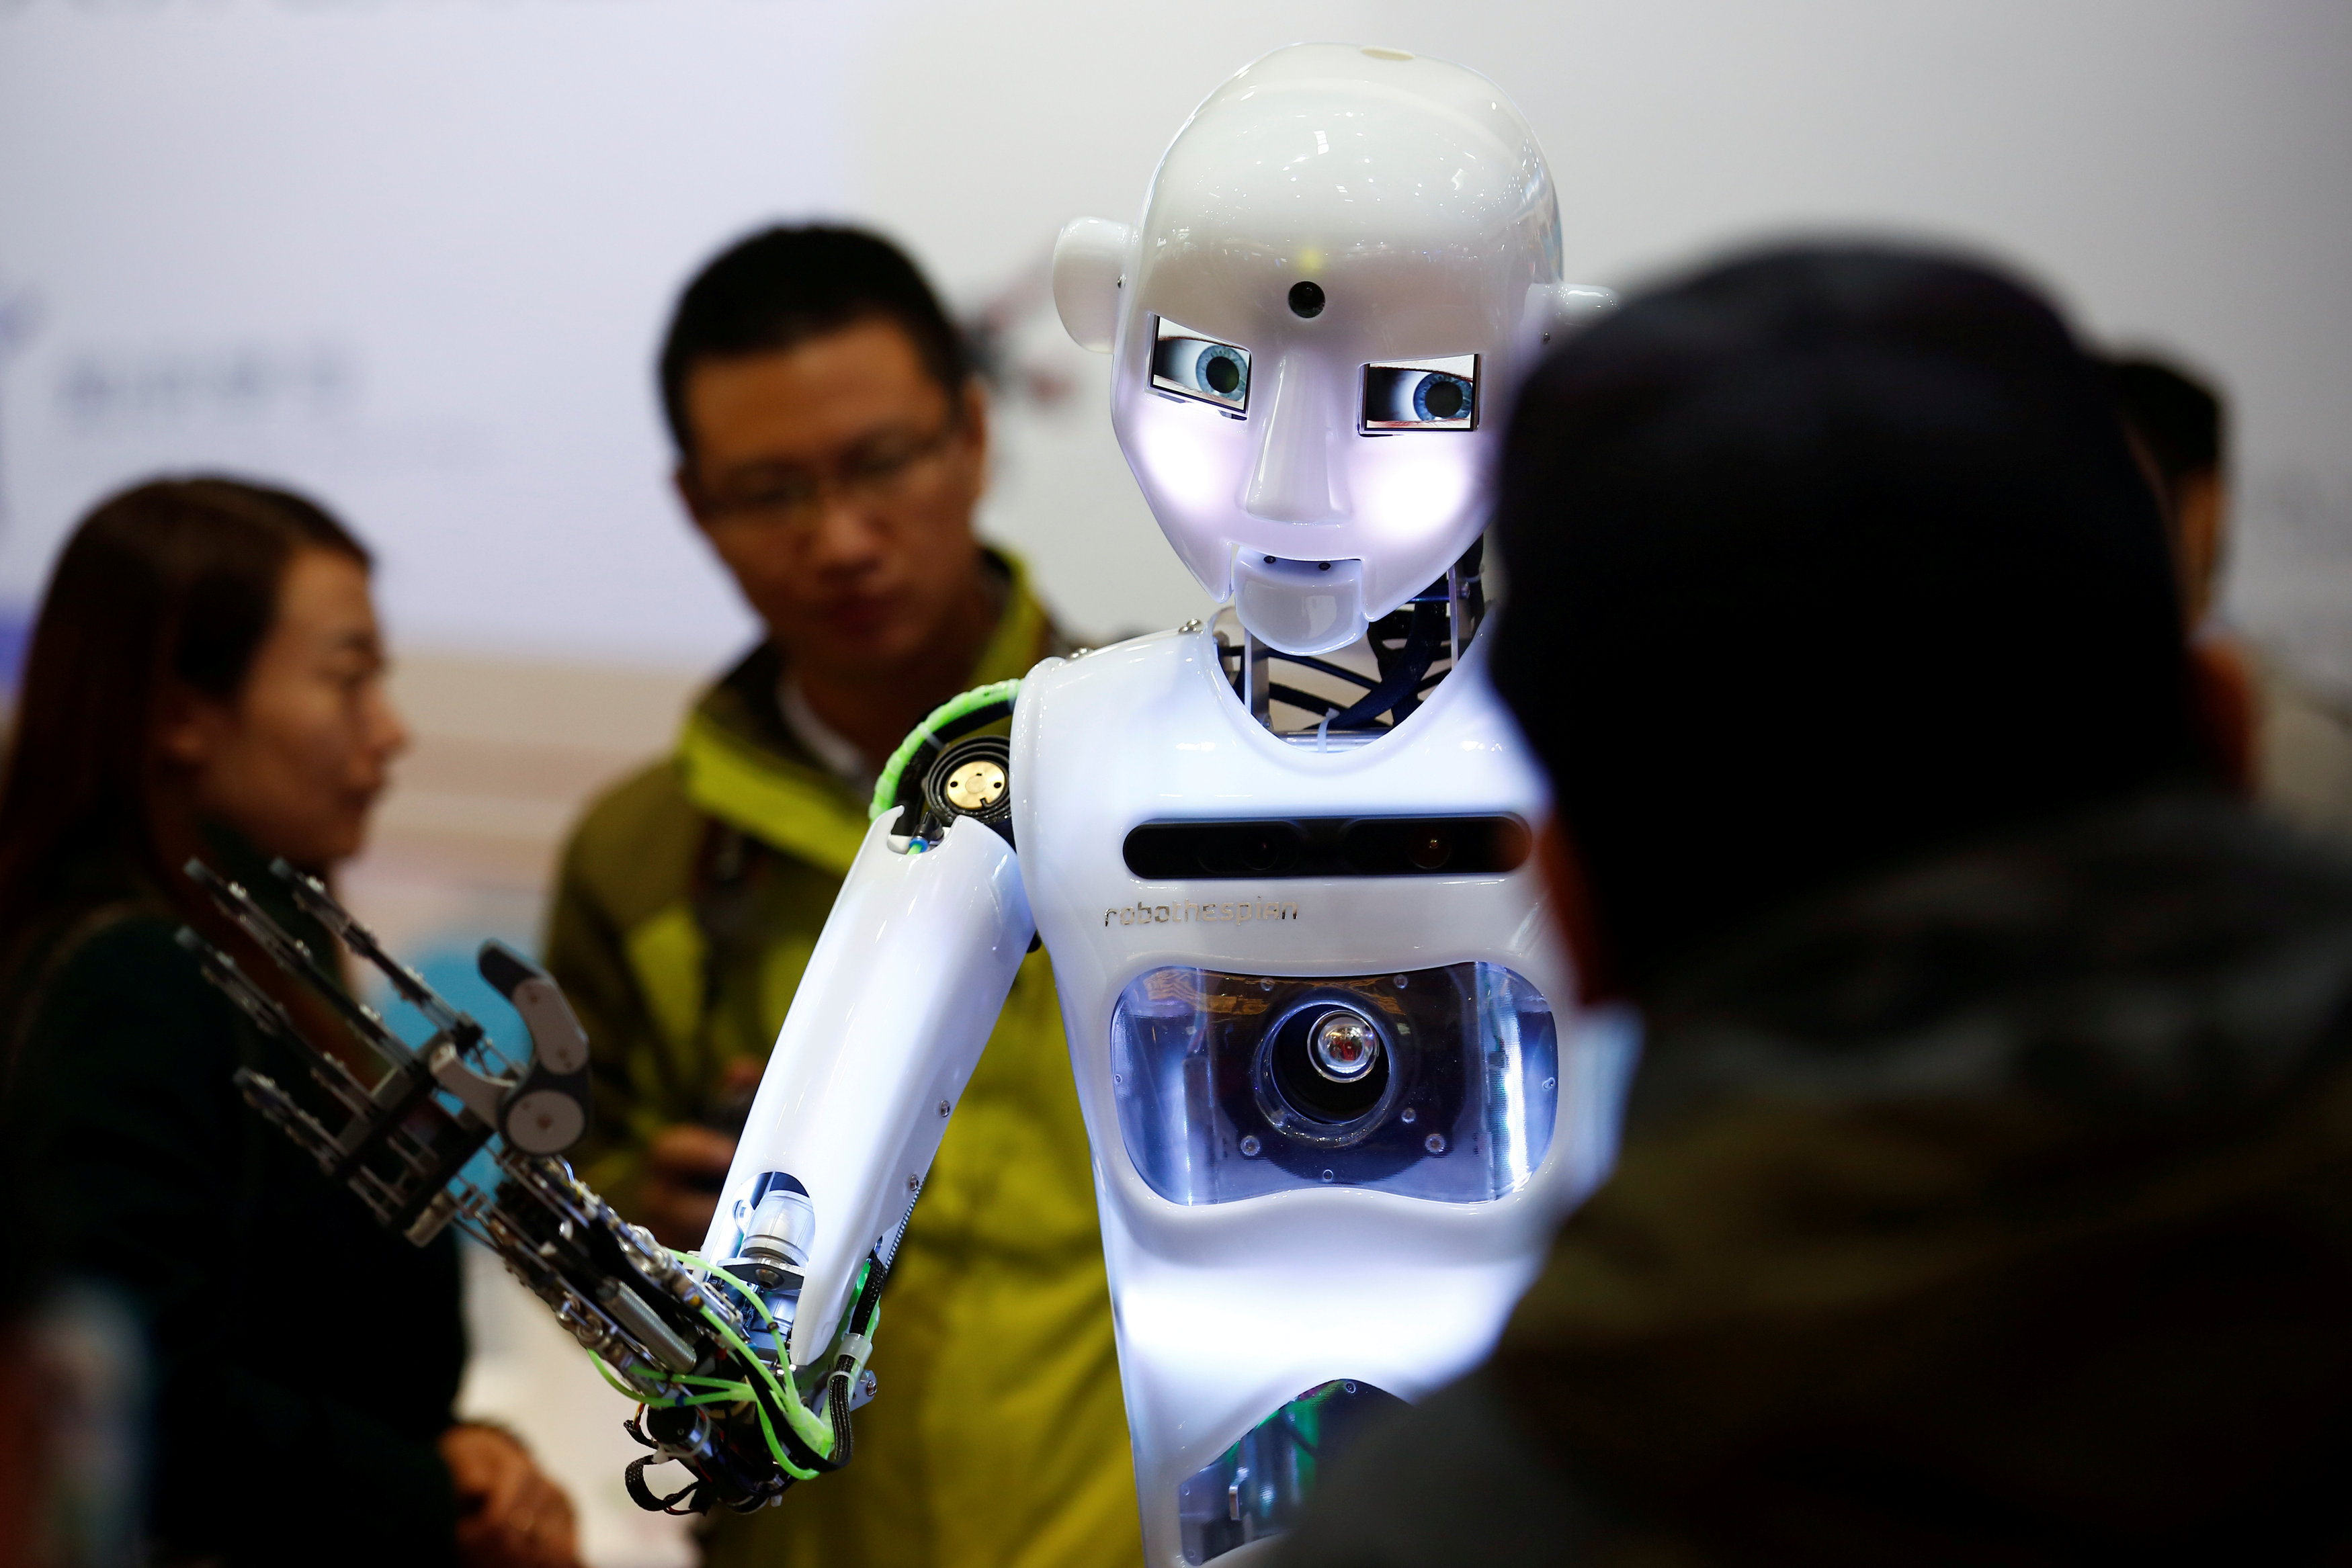 Impact of job-stealing robots a growing concern at Davos